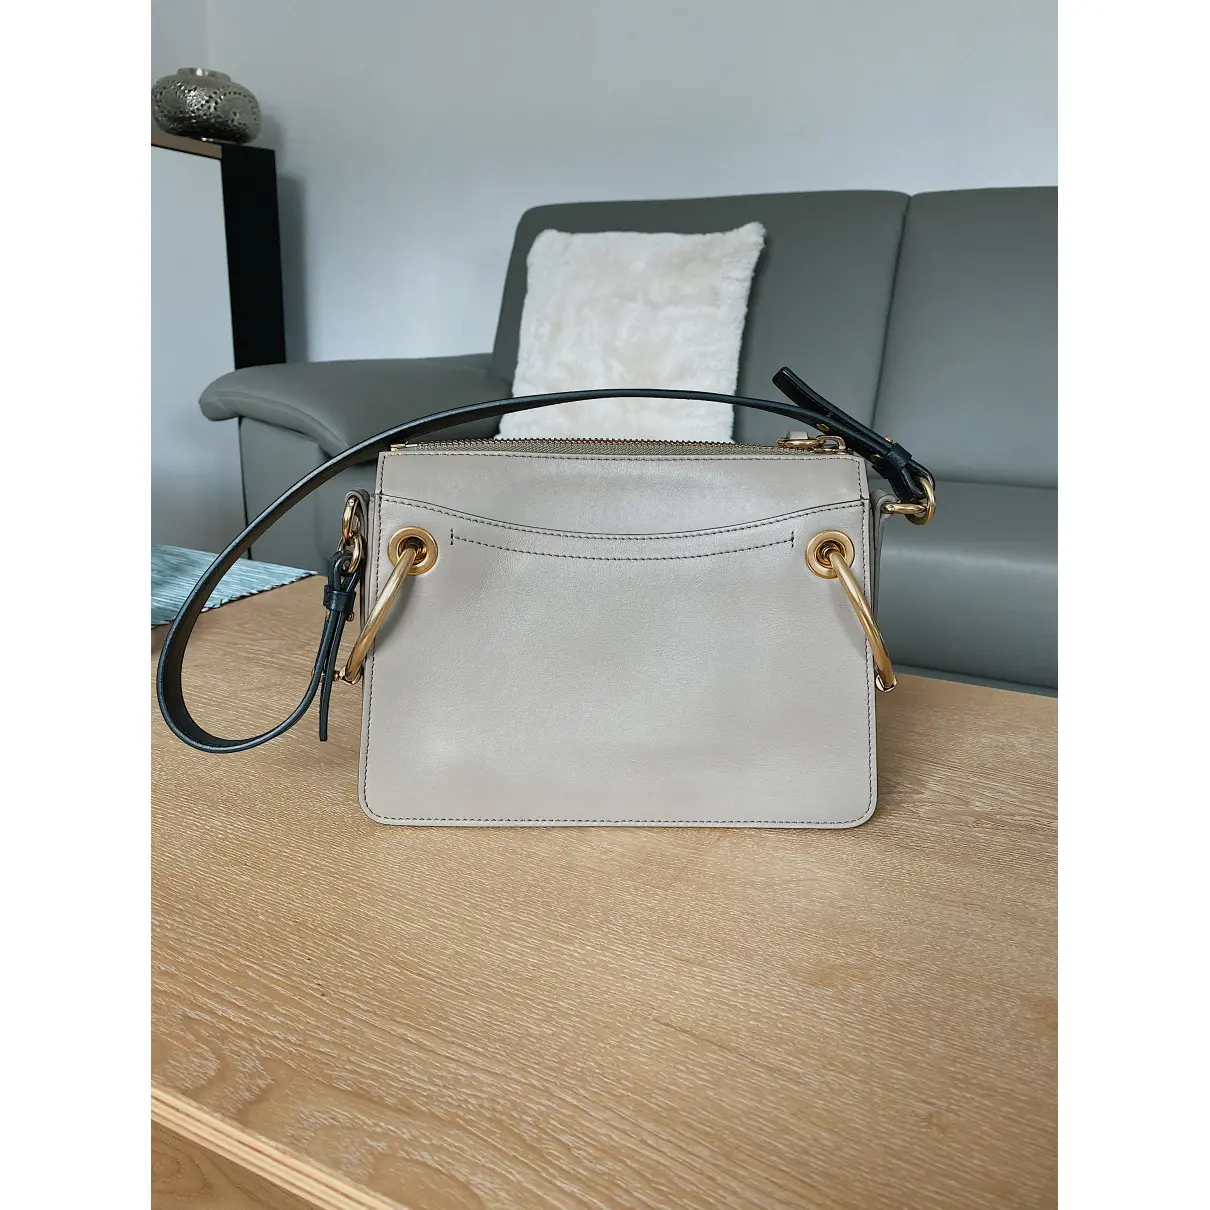 Buy Chloé Roy leather handbag online